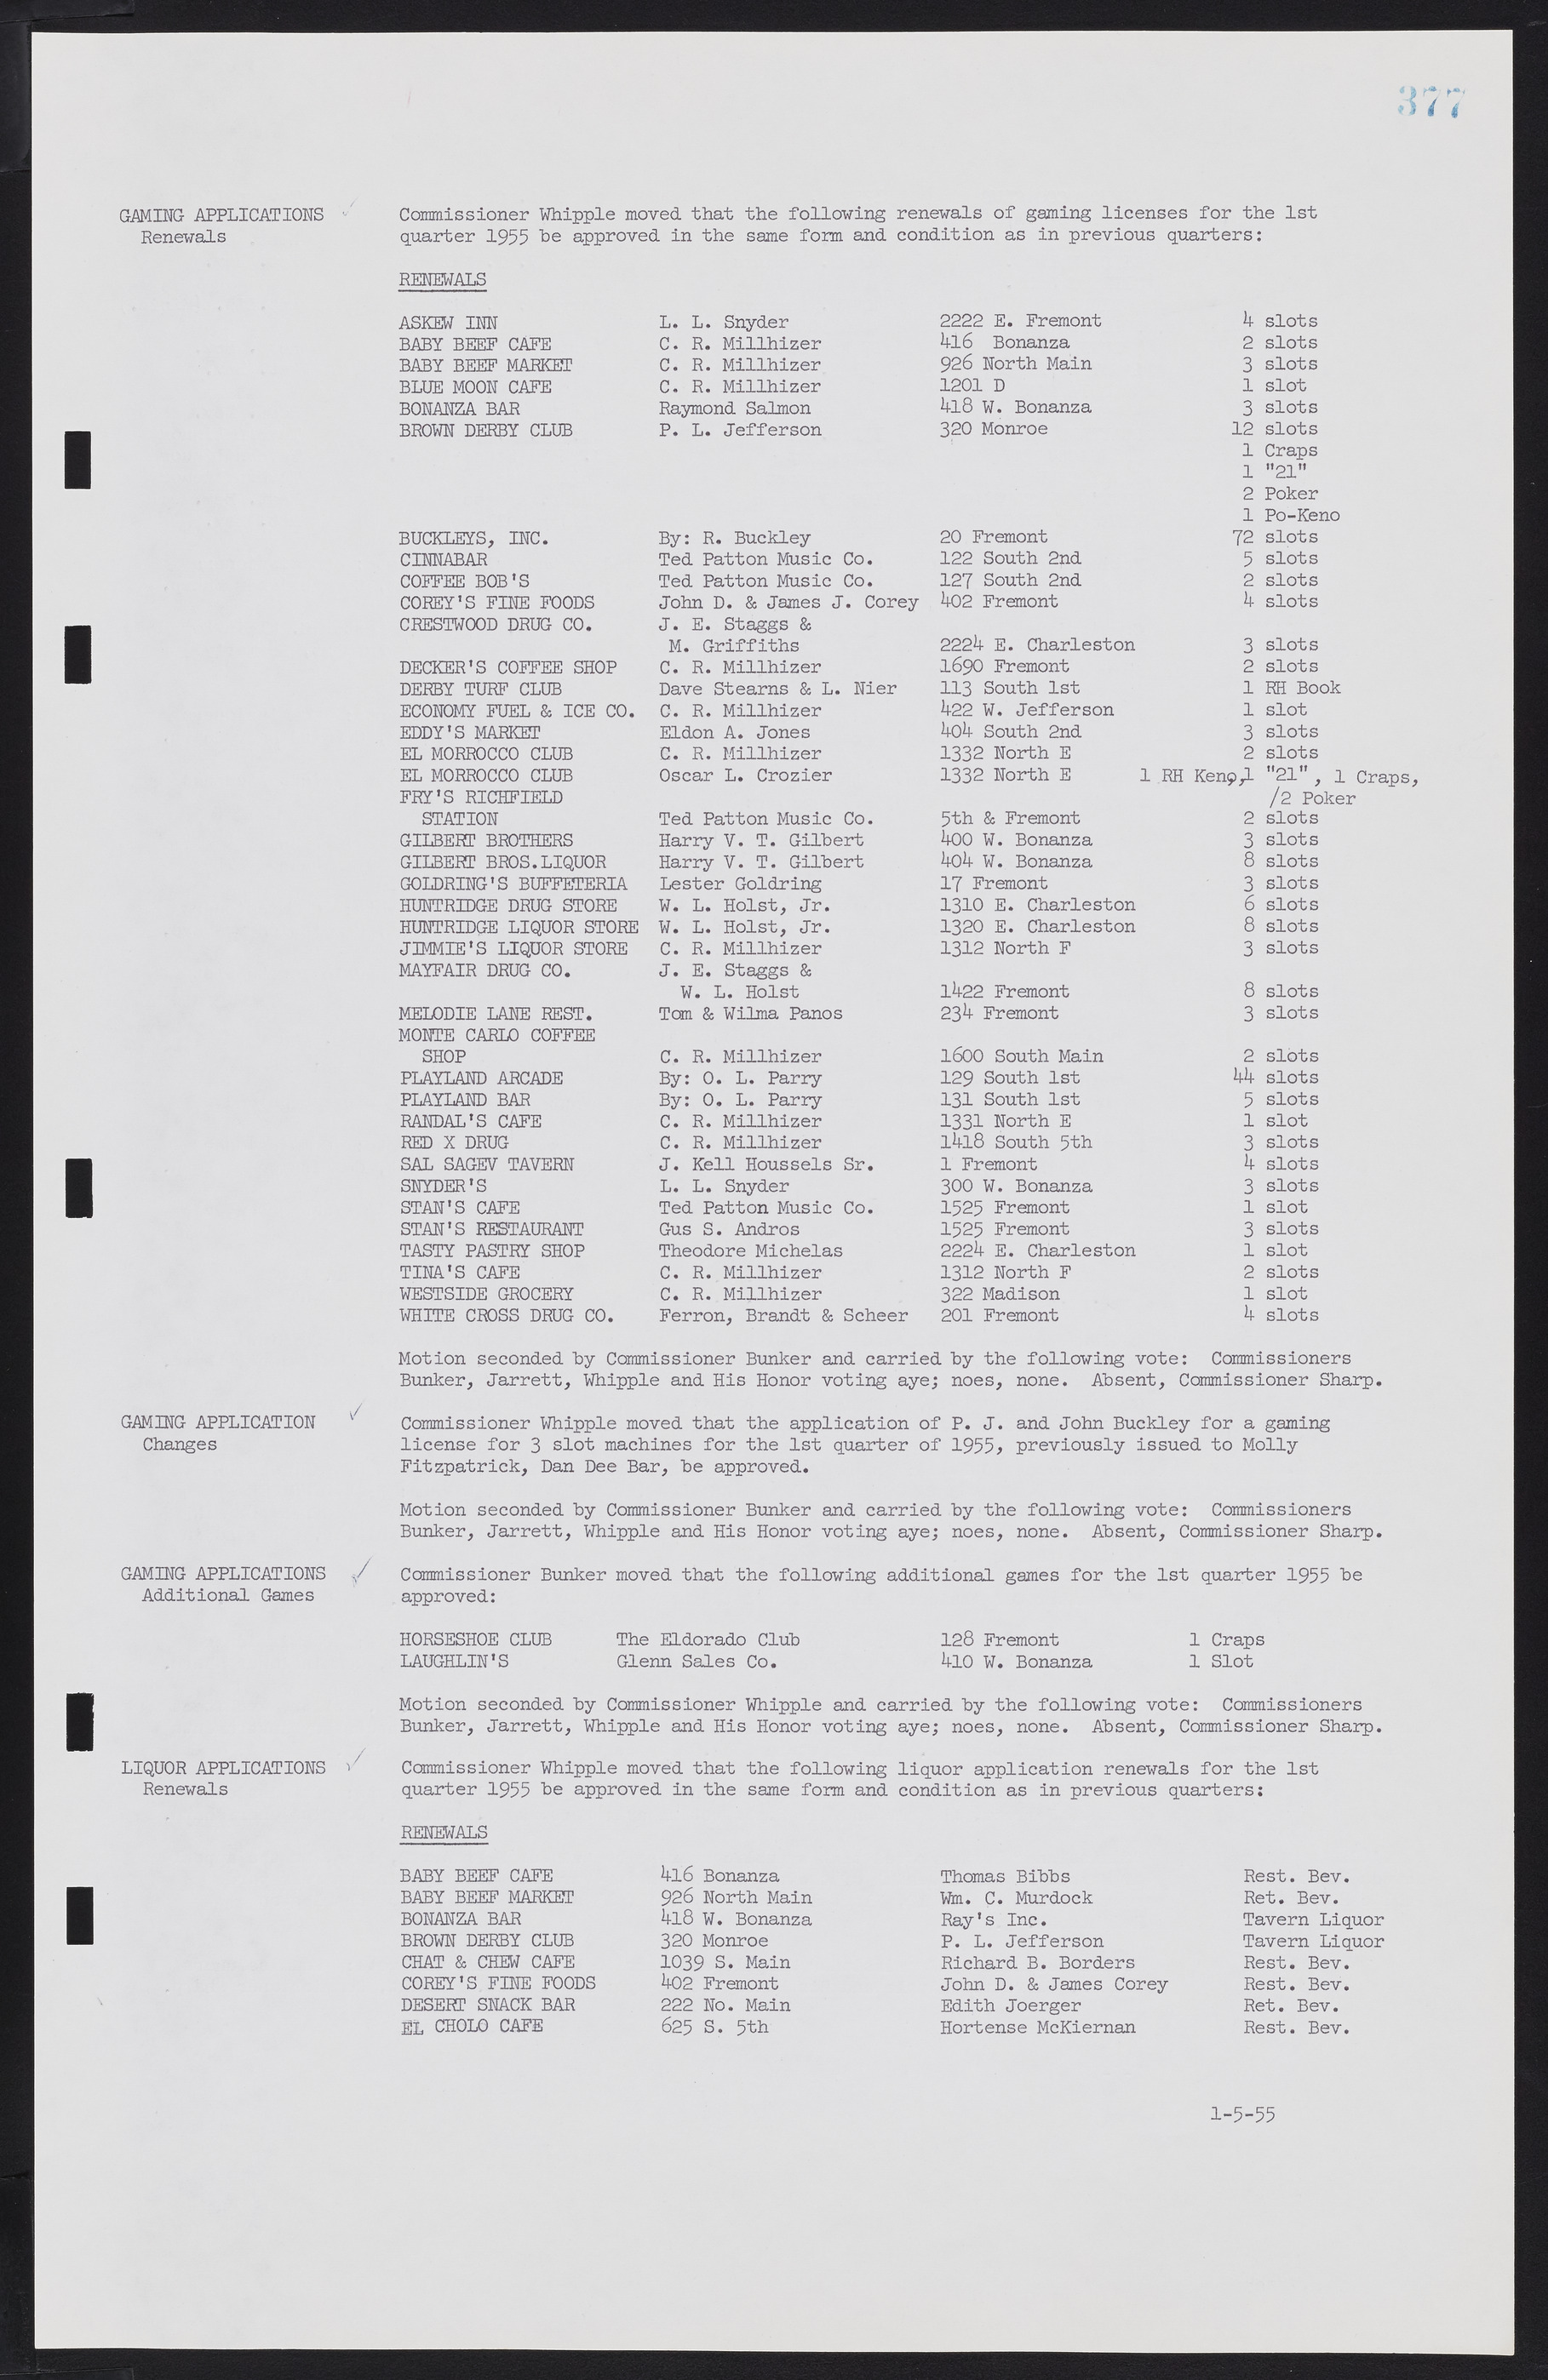 Las Vegas City Commission Minutes, February 17, 1954 to September 21, 1955, lvc000009-383